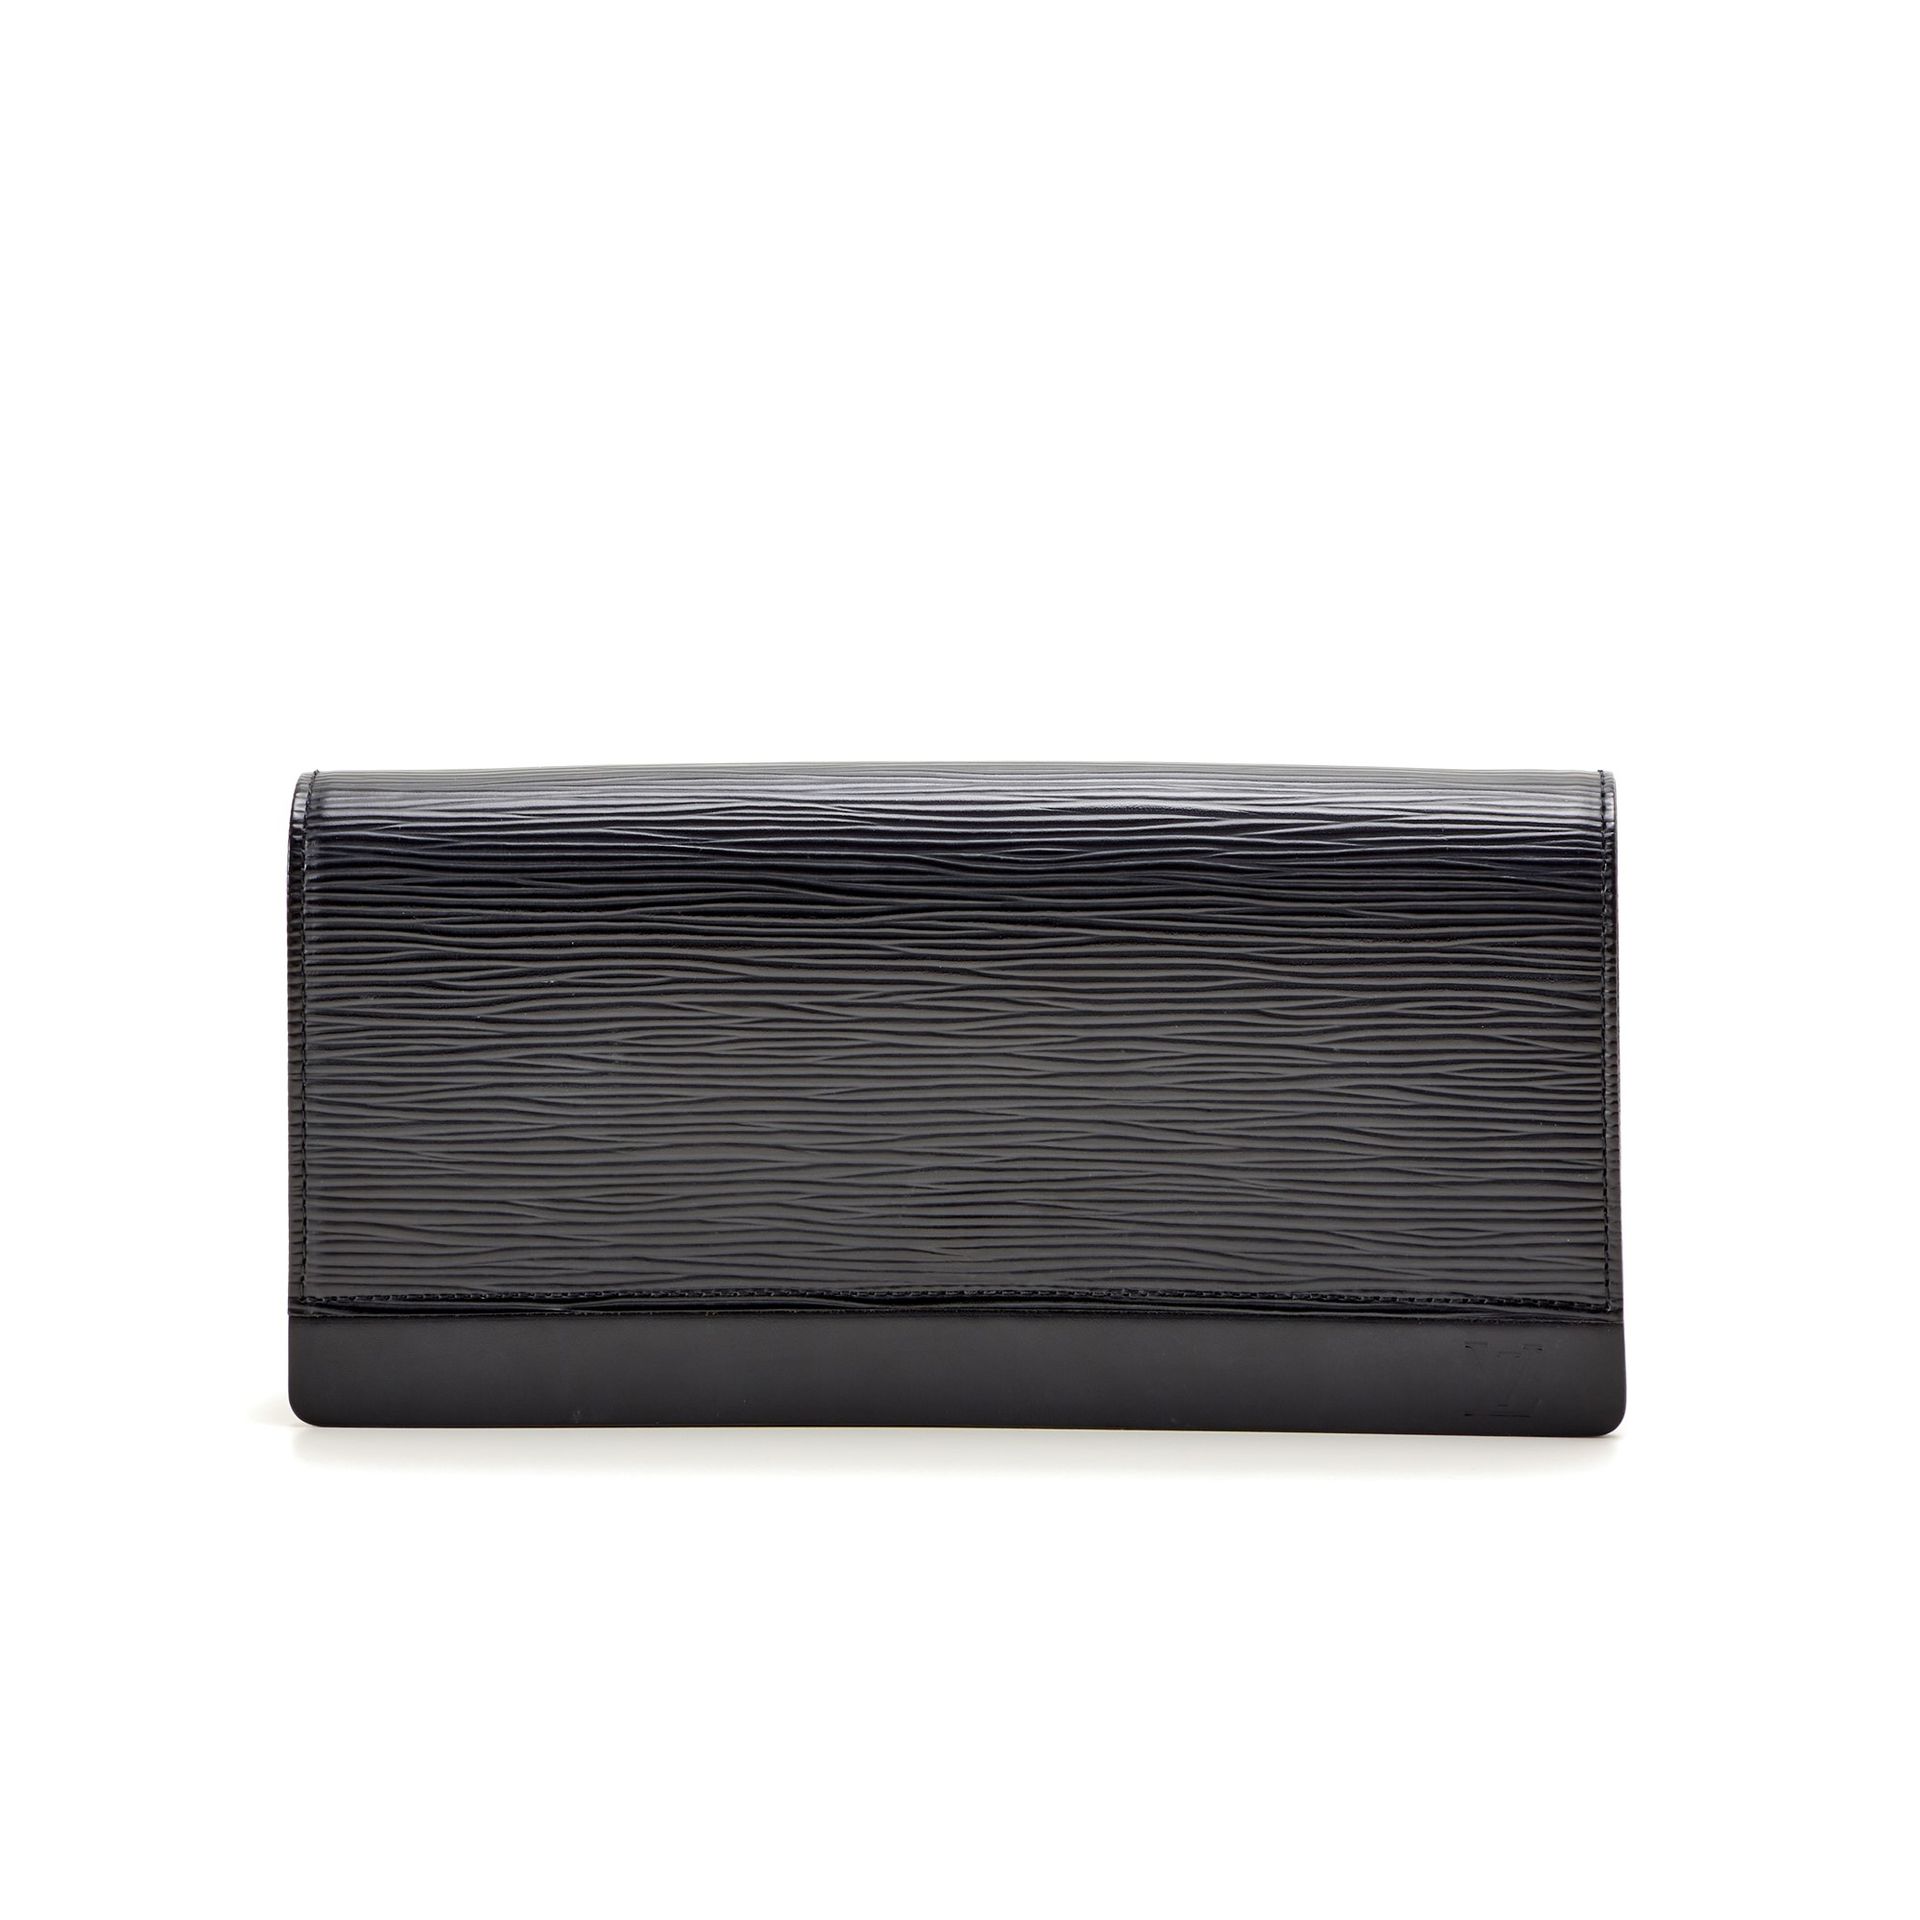 Louis Vuitton clutch bag in black Epi leather, inside on…